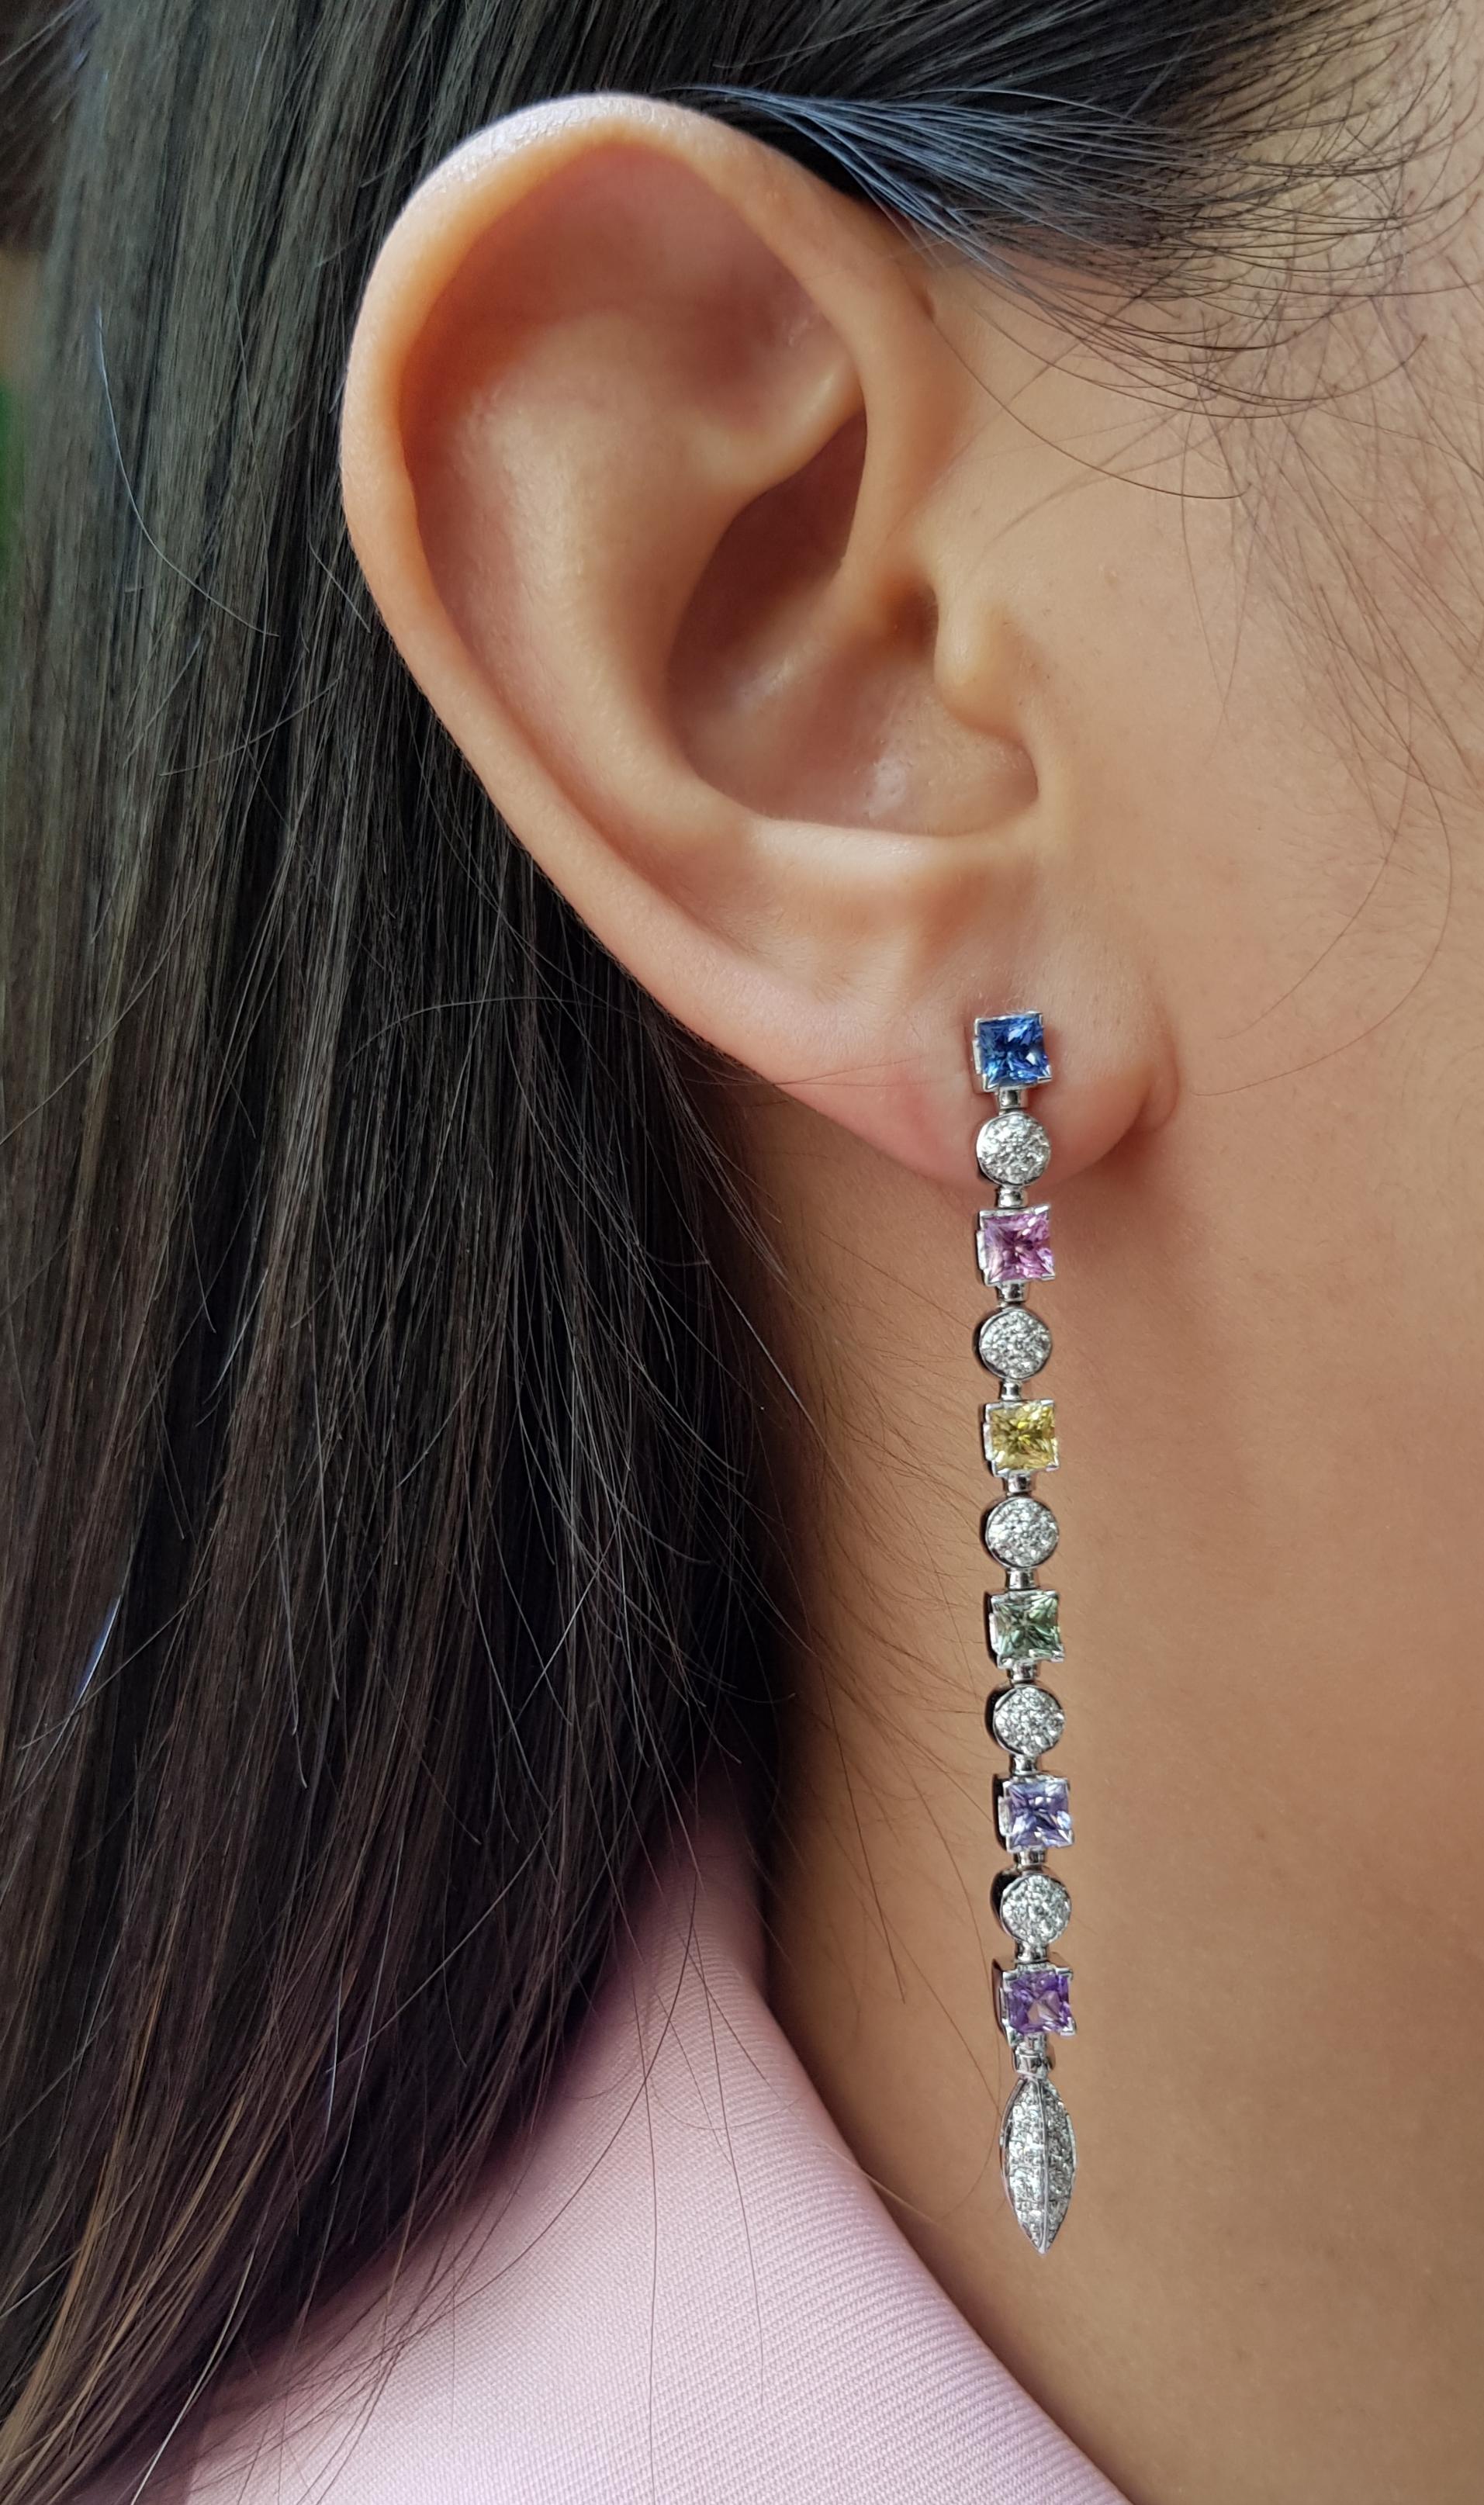 Rainbow Colour Sapphire 8.62 carats with Diamond 0.59 carat Earrings set in 18 Karat White Gold Settings

Width: 0.4 cm
Length: 7.0 cm 

